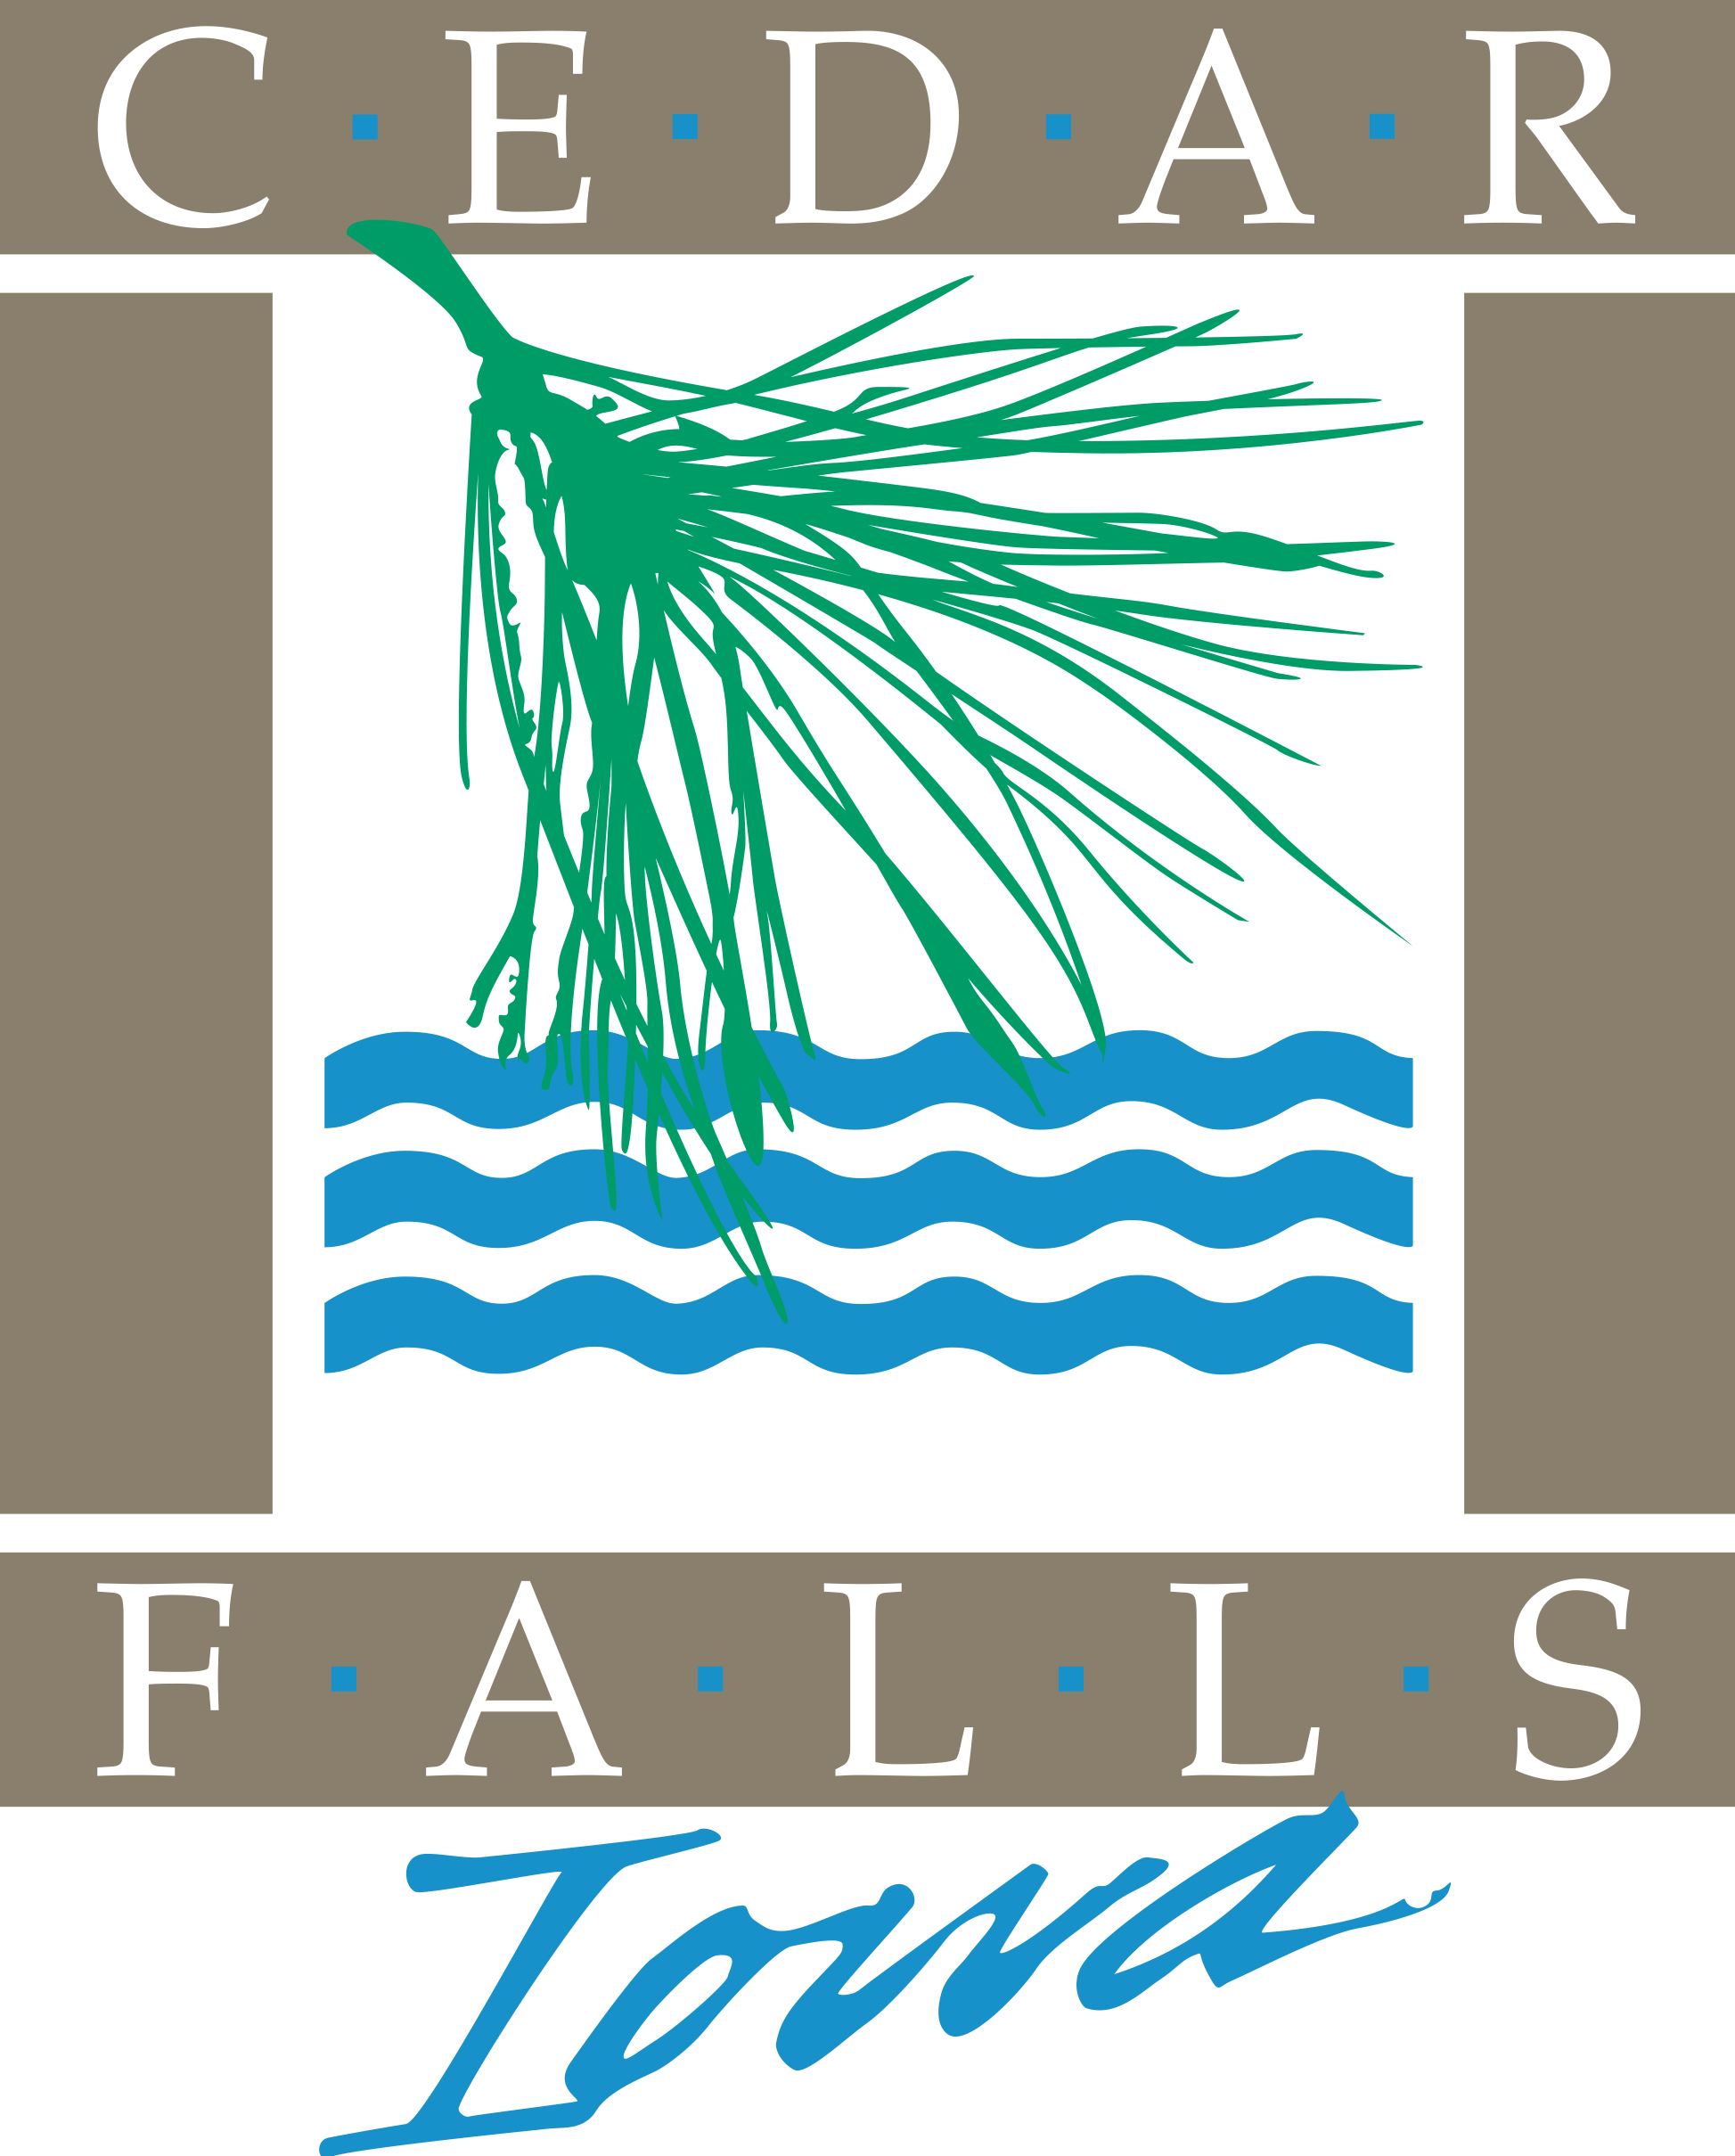 City of Cedar Falls logo